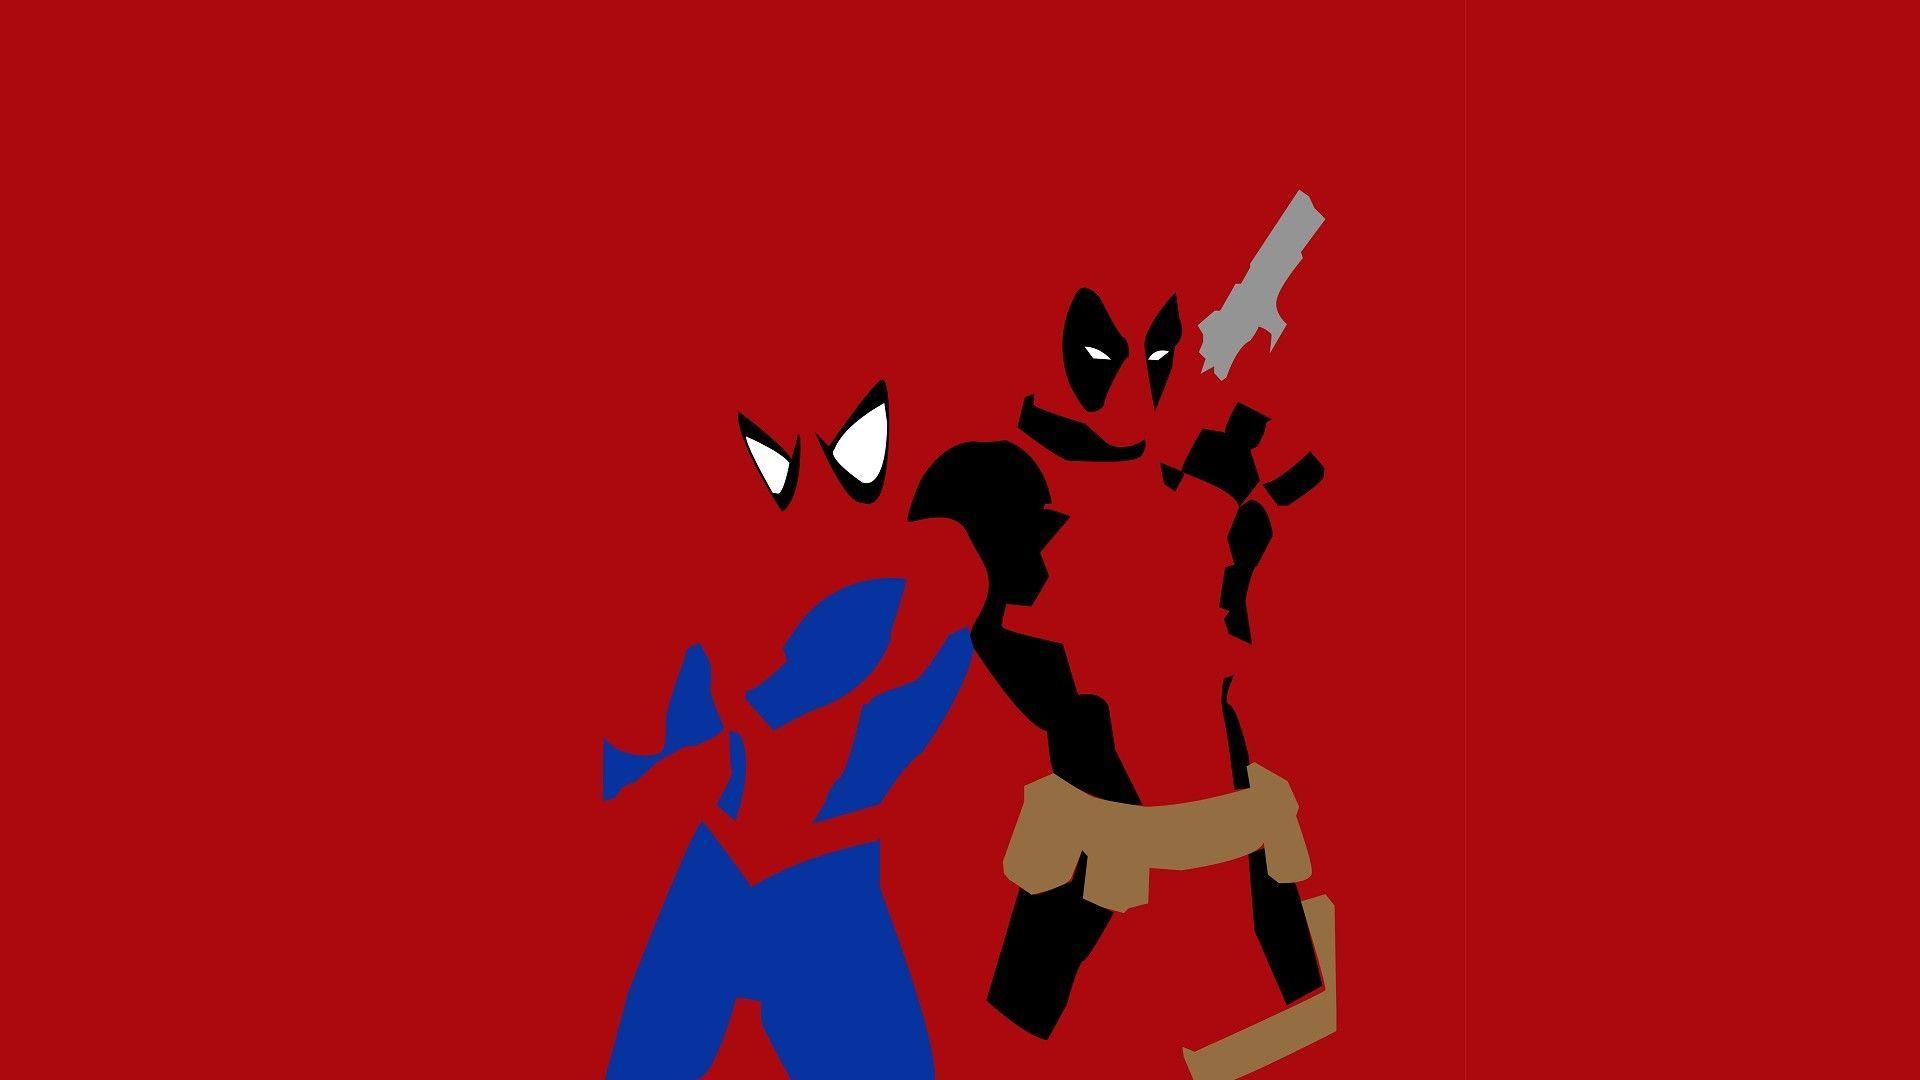 Deadpool and Spiderman Wallpaper